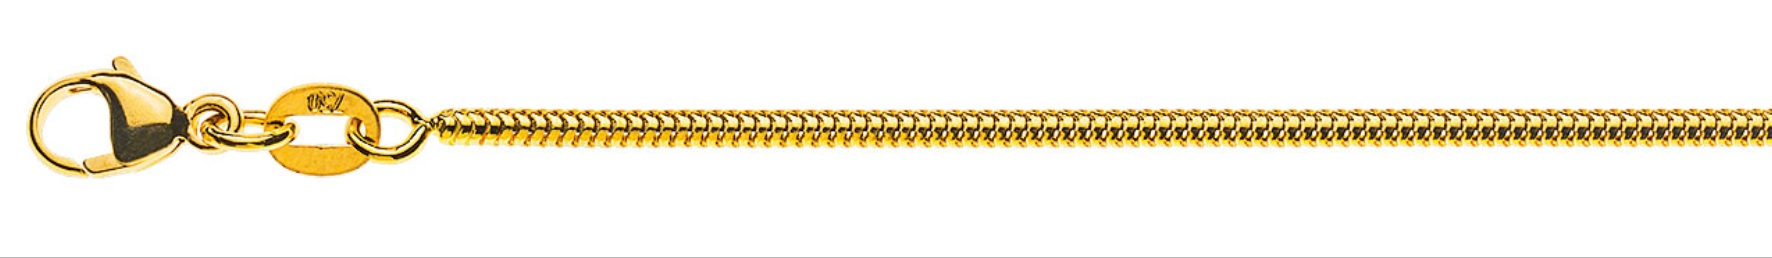 AURONOS Prestige Necklace yellow gold 18K snake chain 42cm 1.6mm